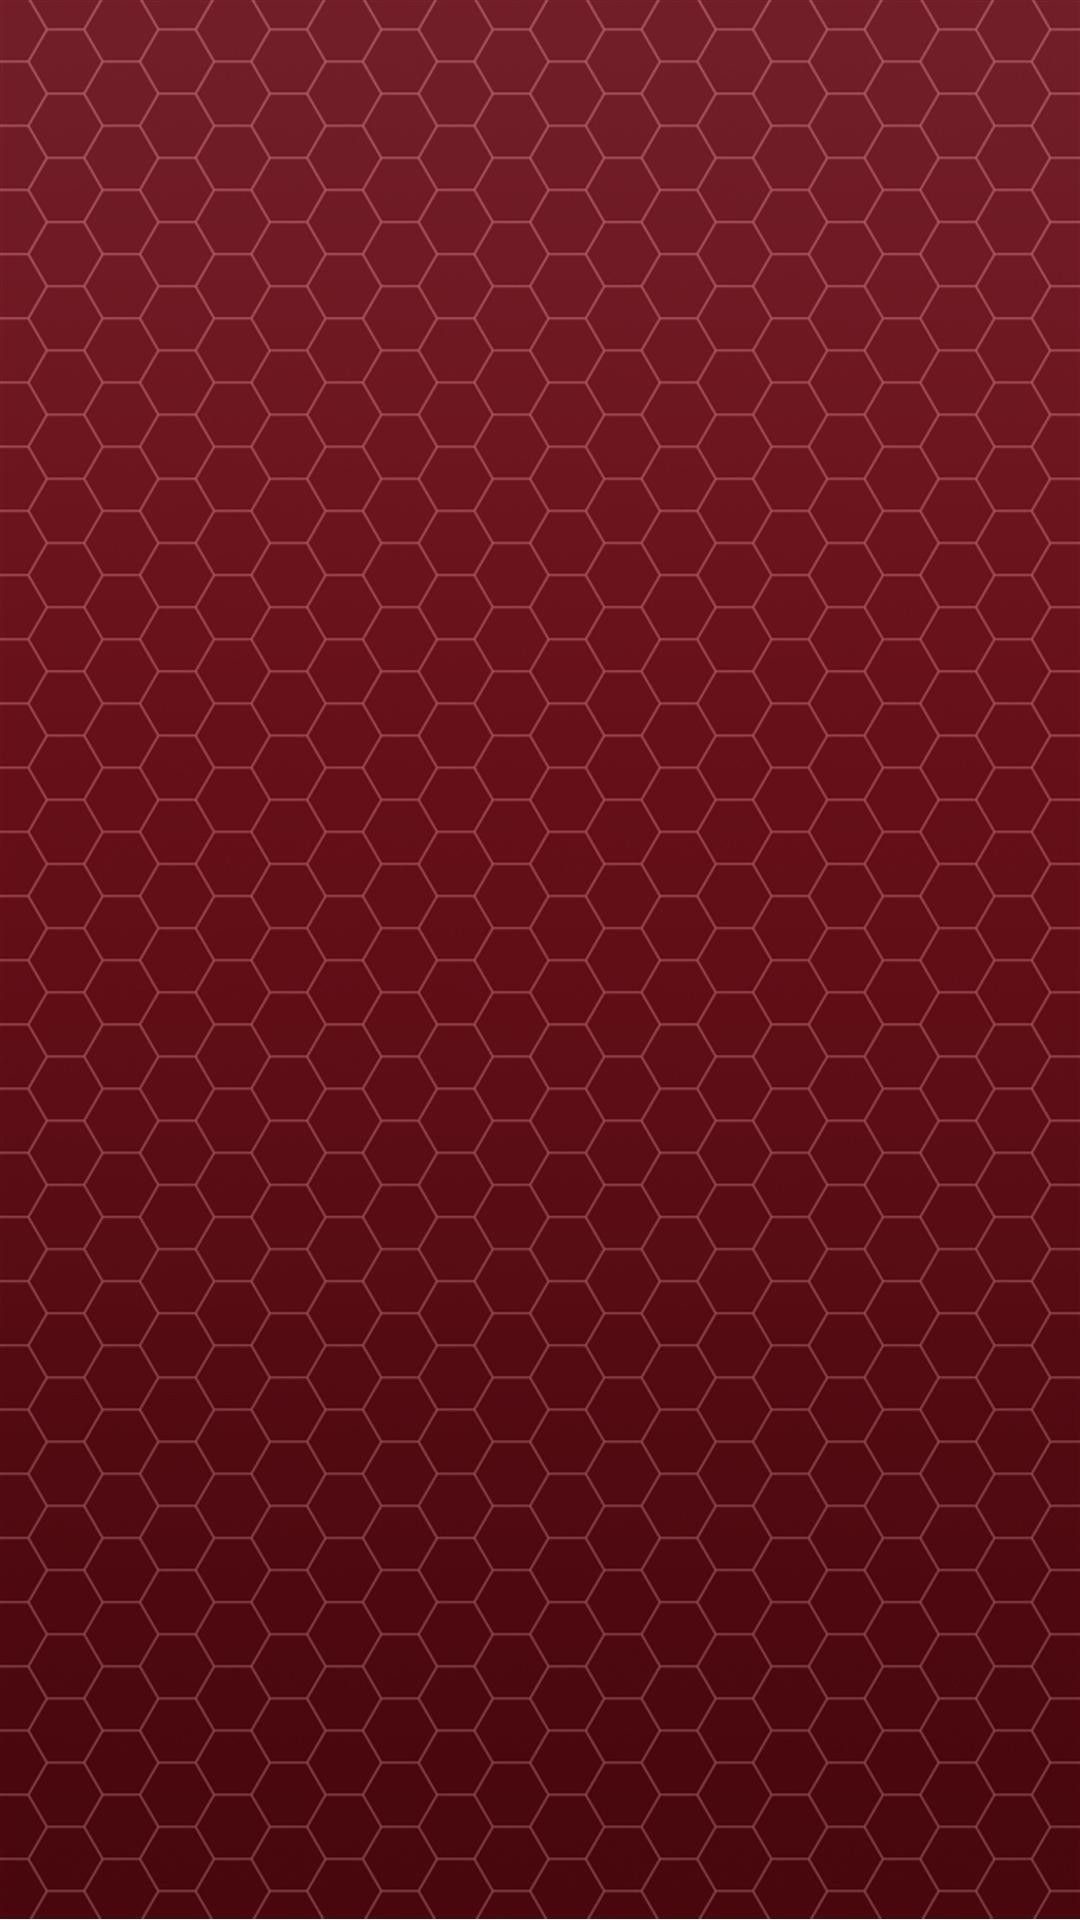 1080x1920 Honeycomb Red Pattern Smartphone Wallpaper and Lockscreen HD Check more at  https://phonewallp